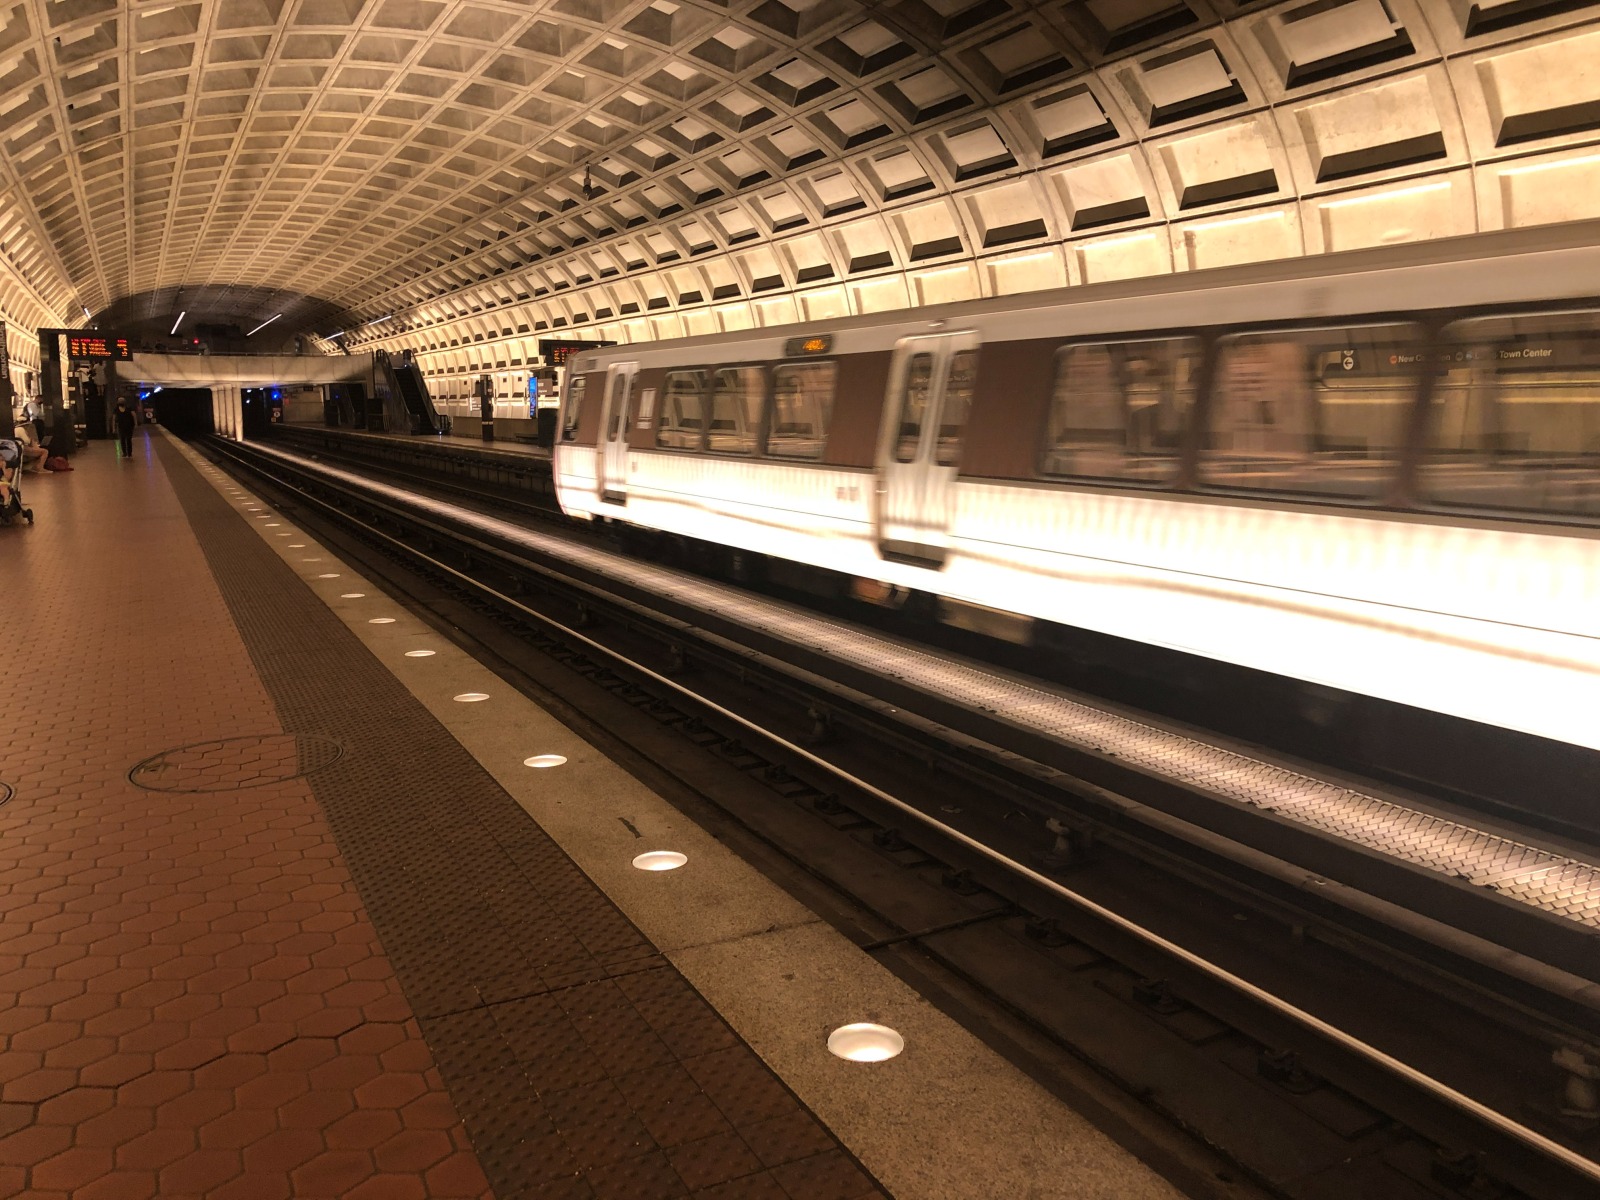 Day 3 – Smithsonian Metro Station